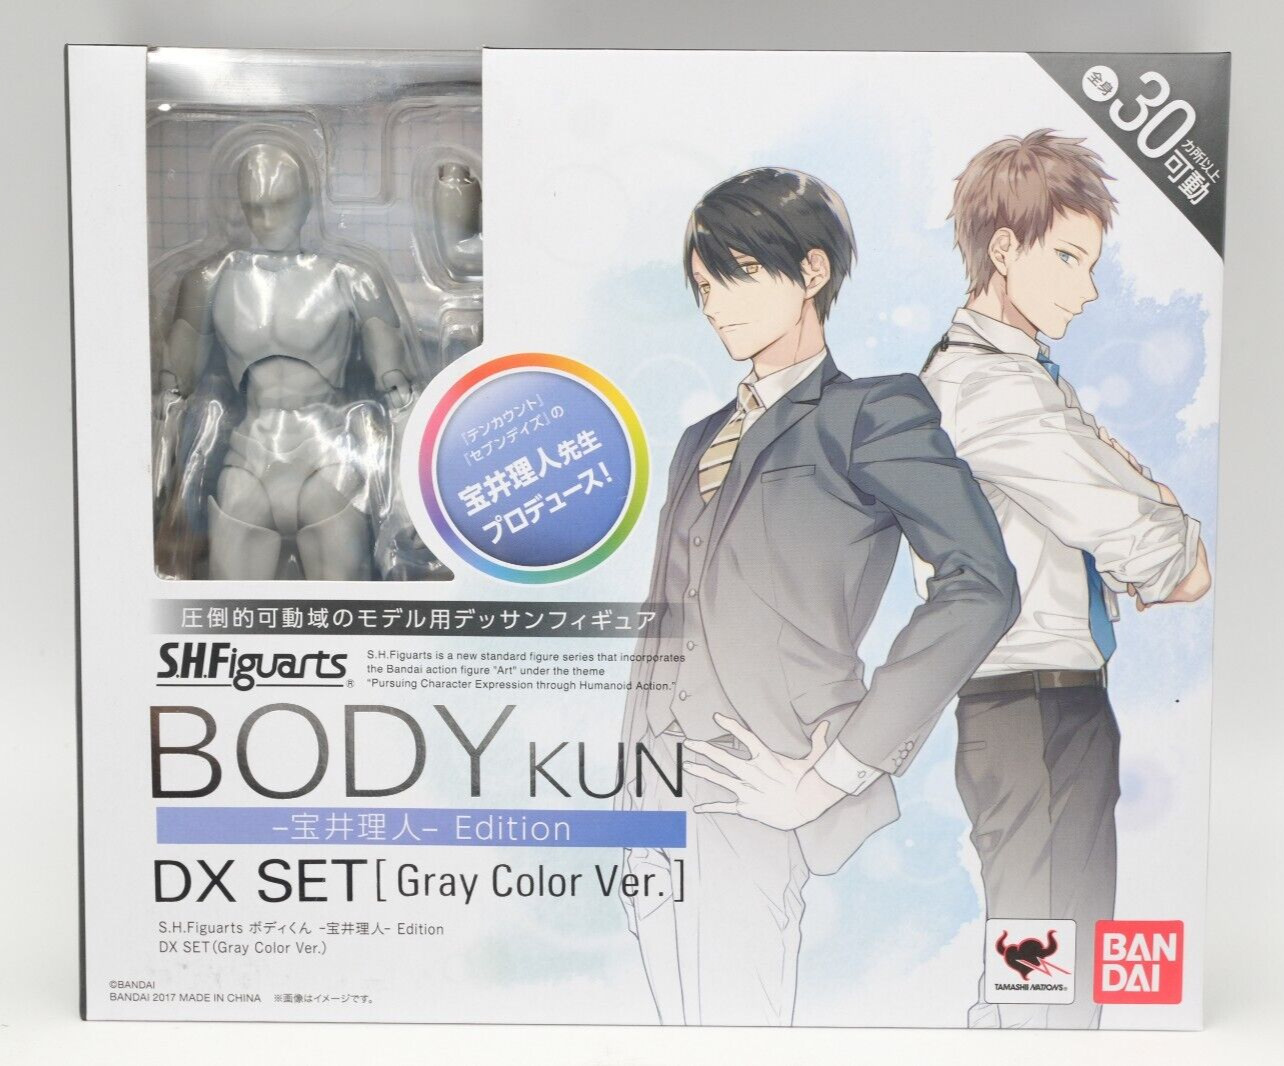 New Bandai Tamashii Nations S.H.Figuarts Body Kun Takarai DX Set Gray Color Ver